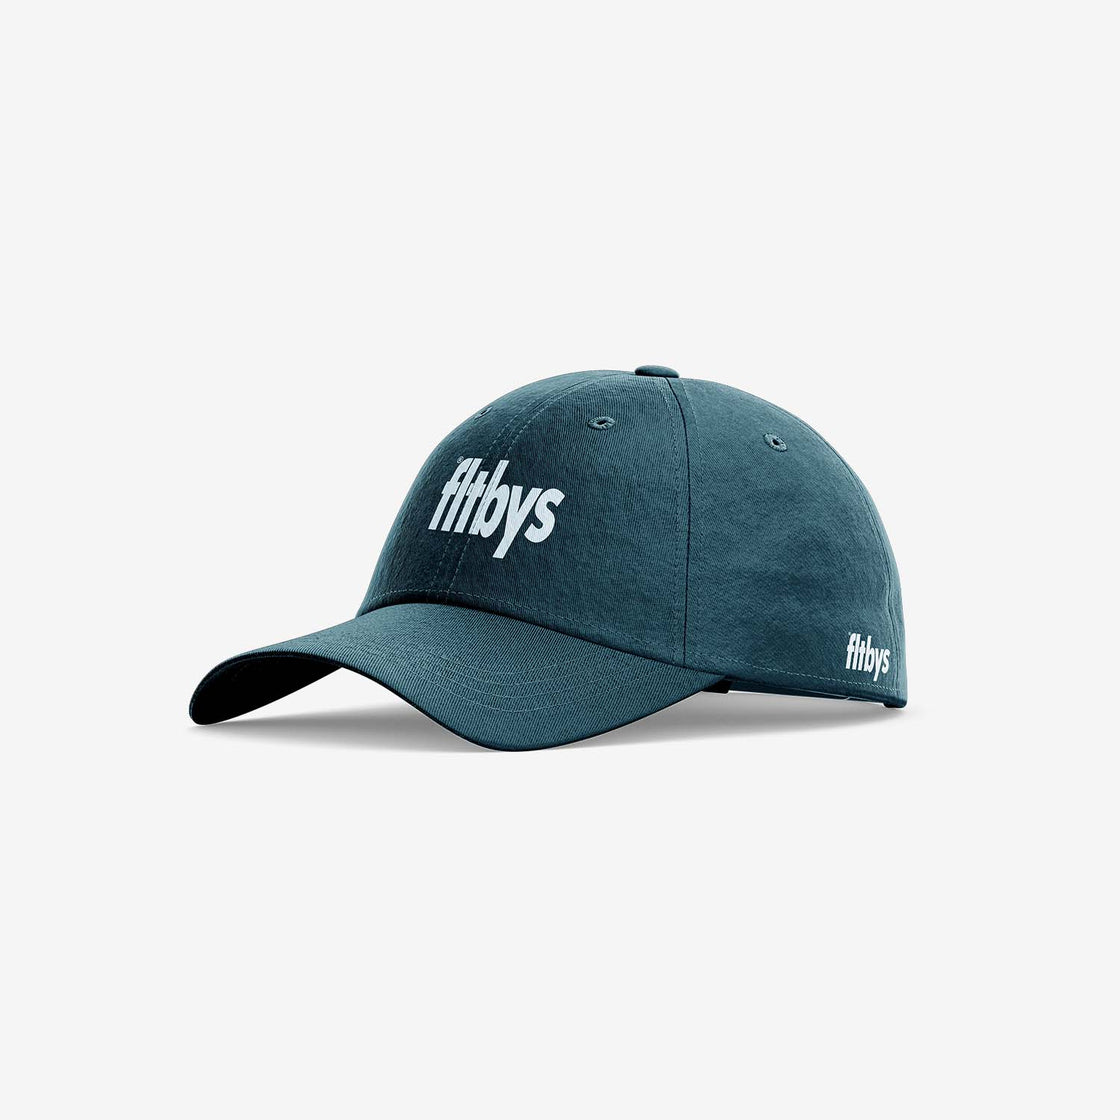 FLTBYS Classic Hat - Royal